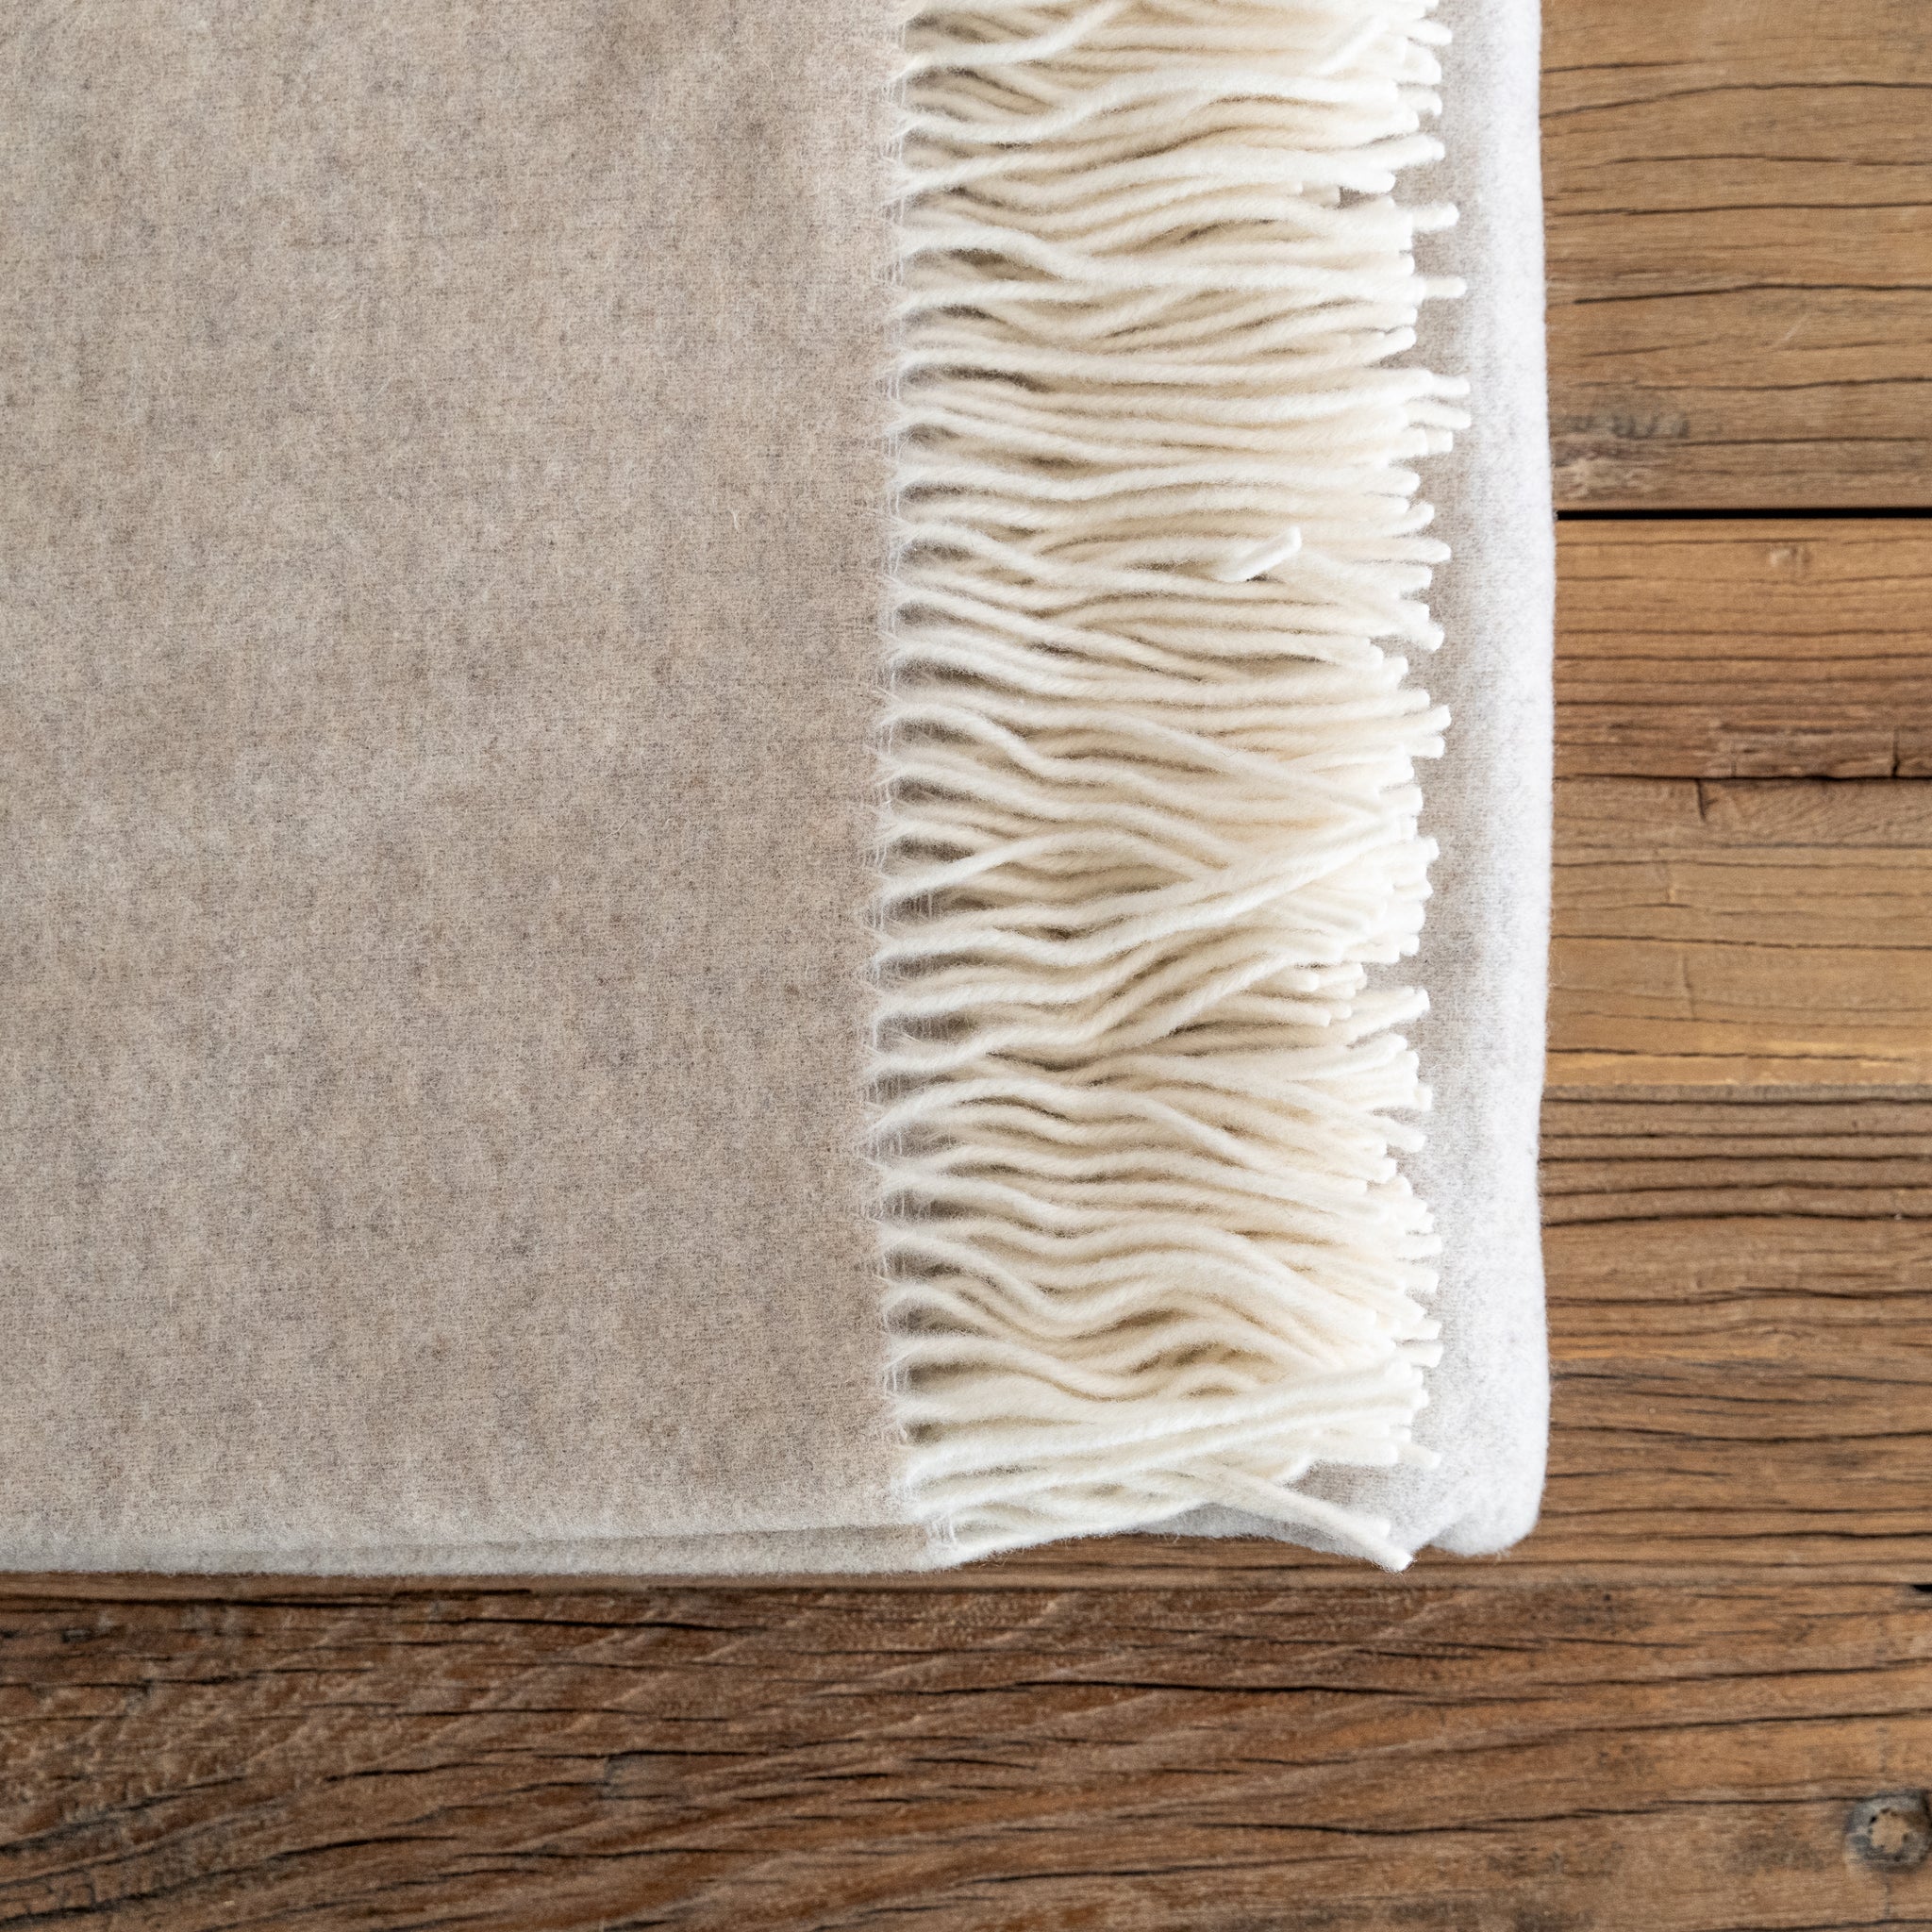 100% cashmere & merino wool blanket - Ivory